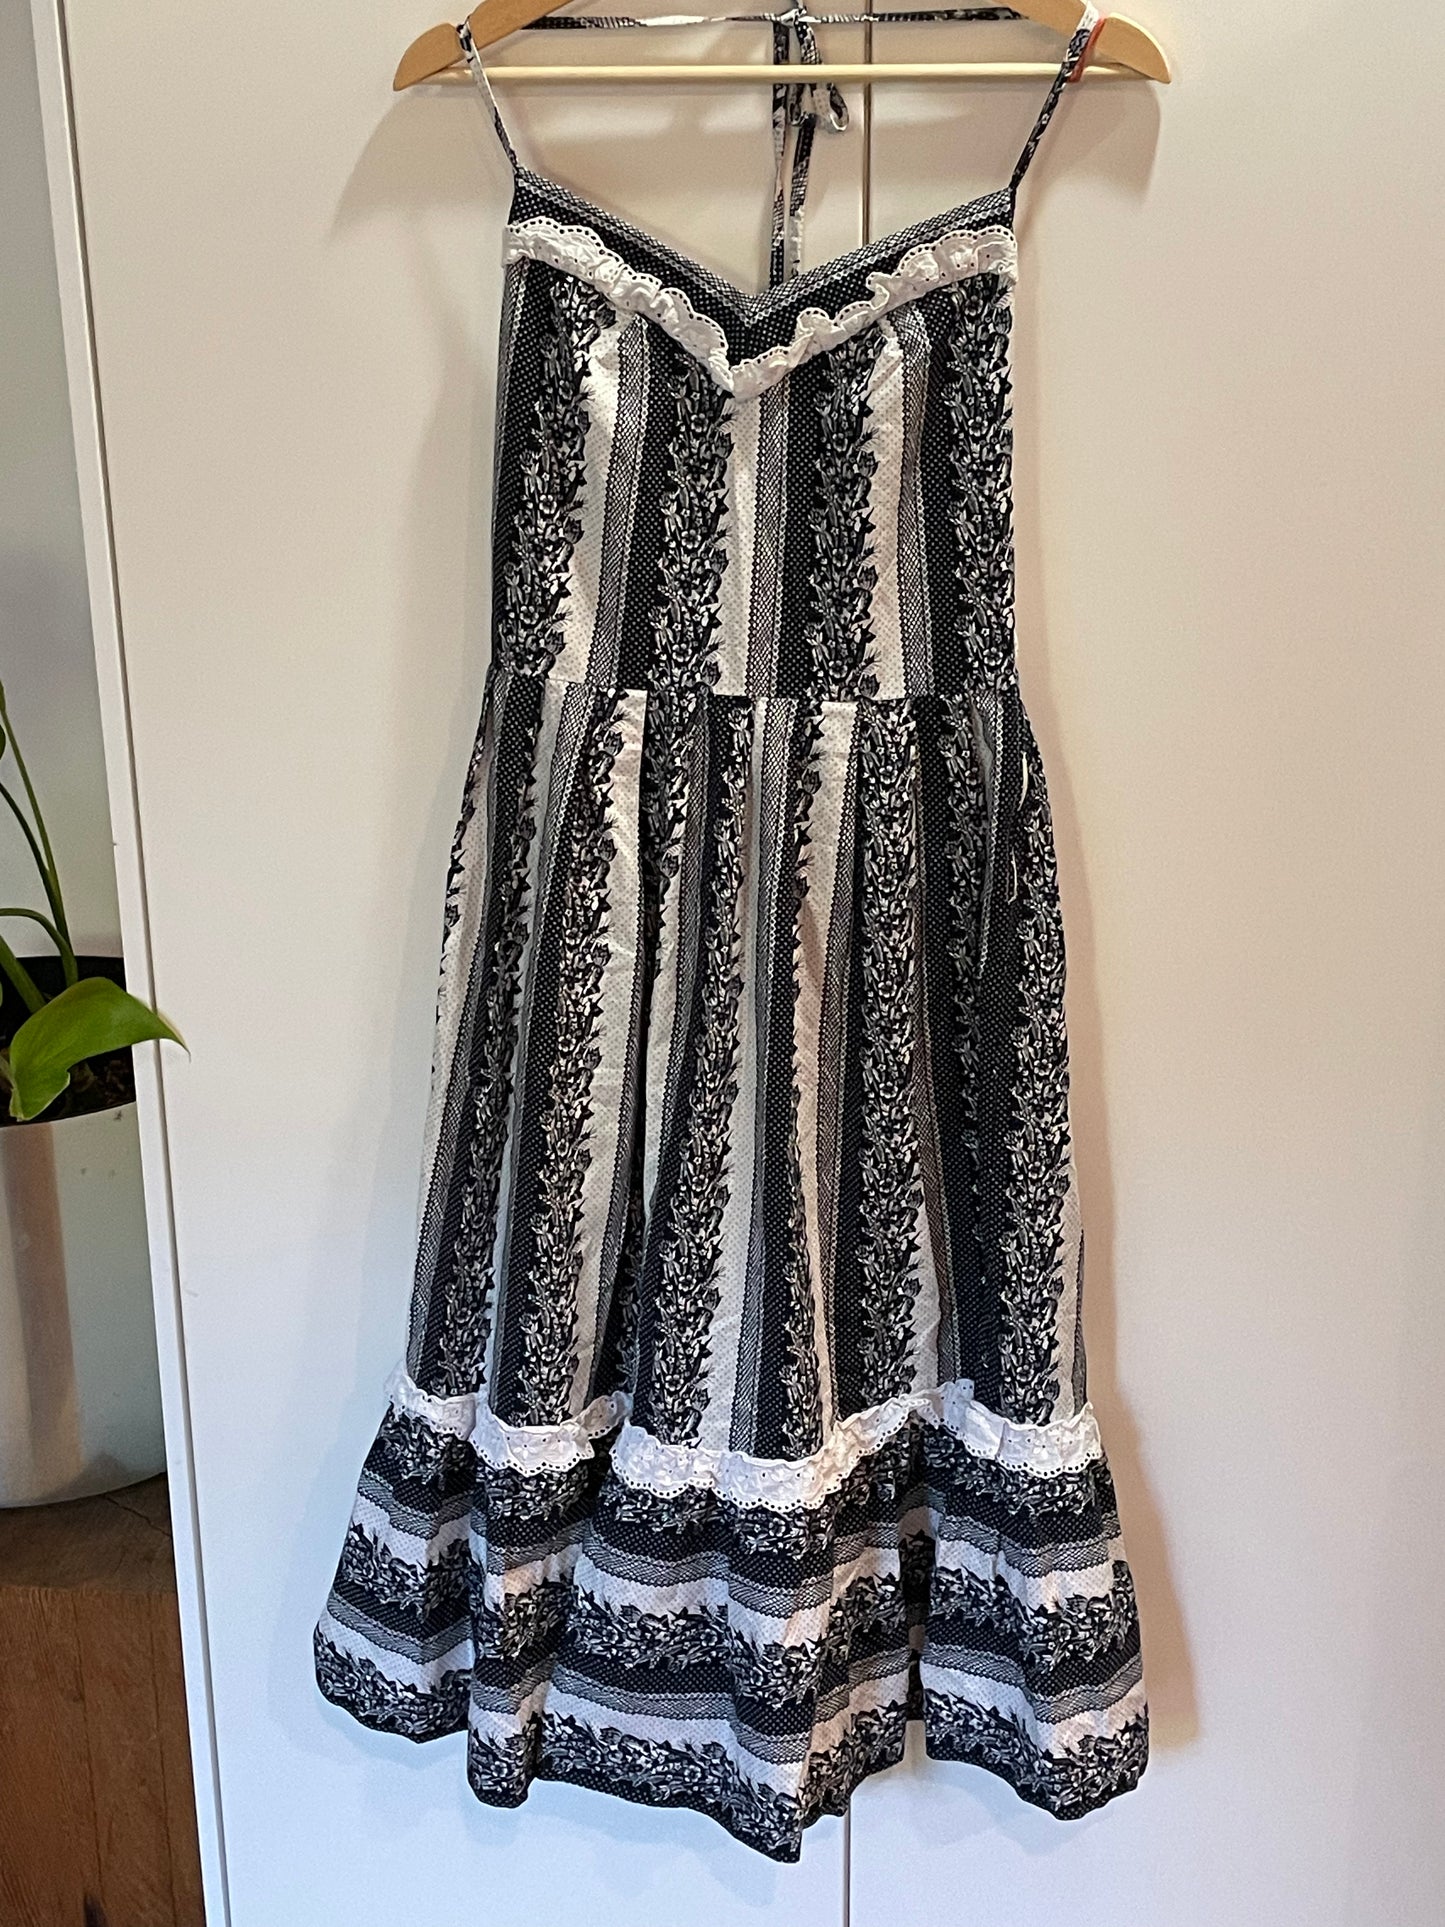 PEARLE closet - Vintage black and white floral halter dress